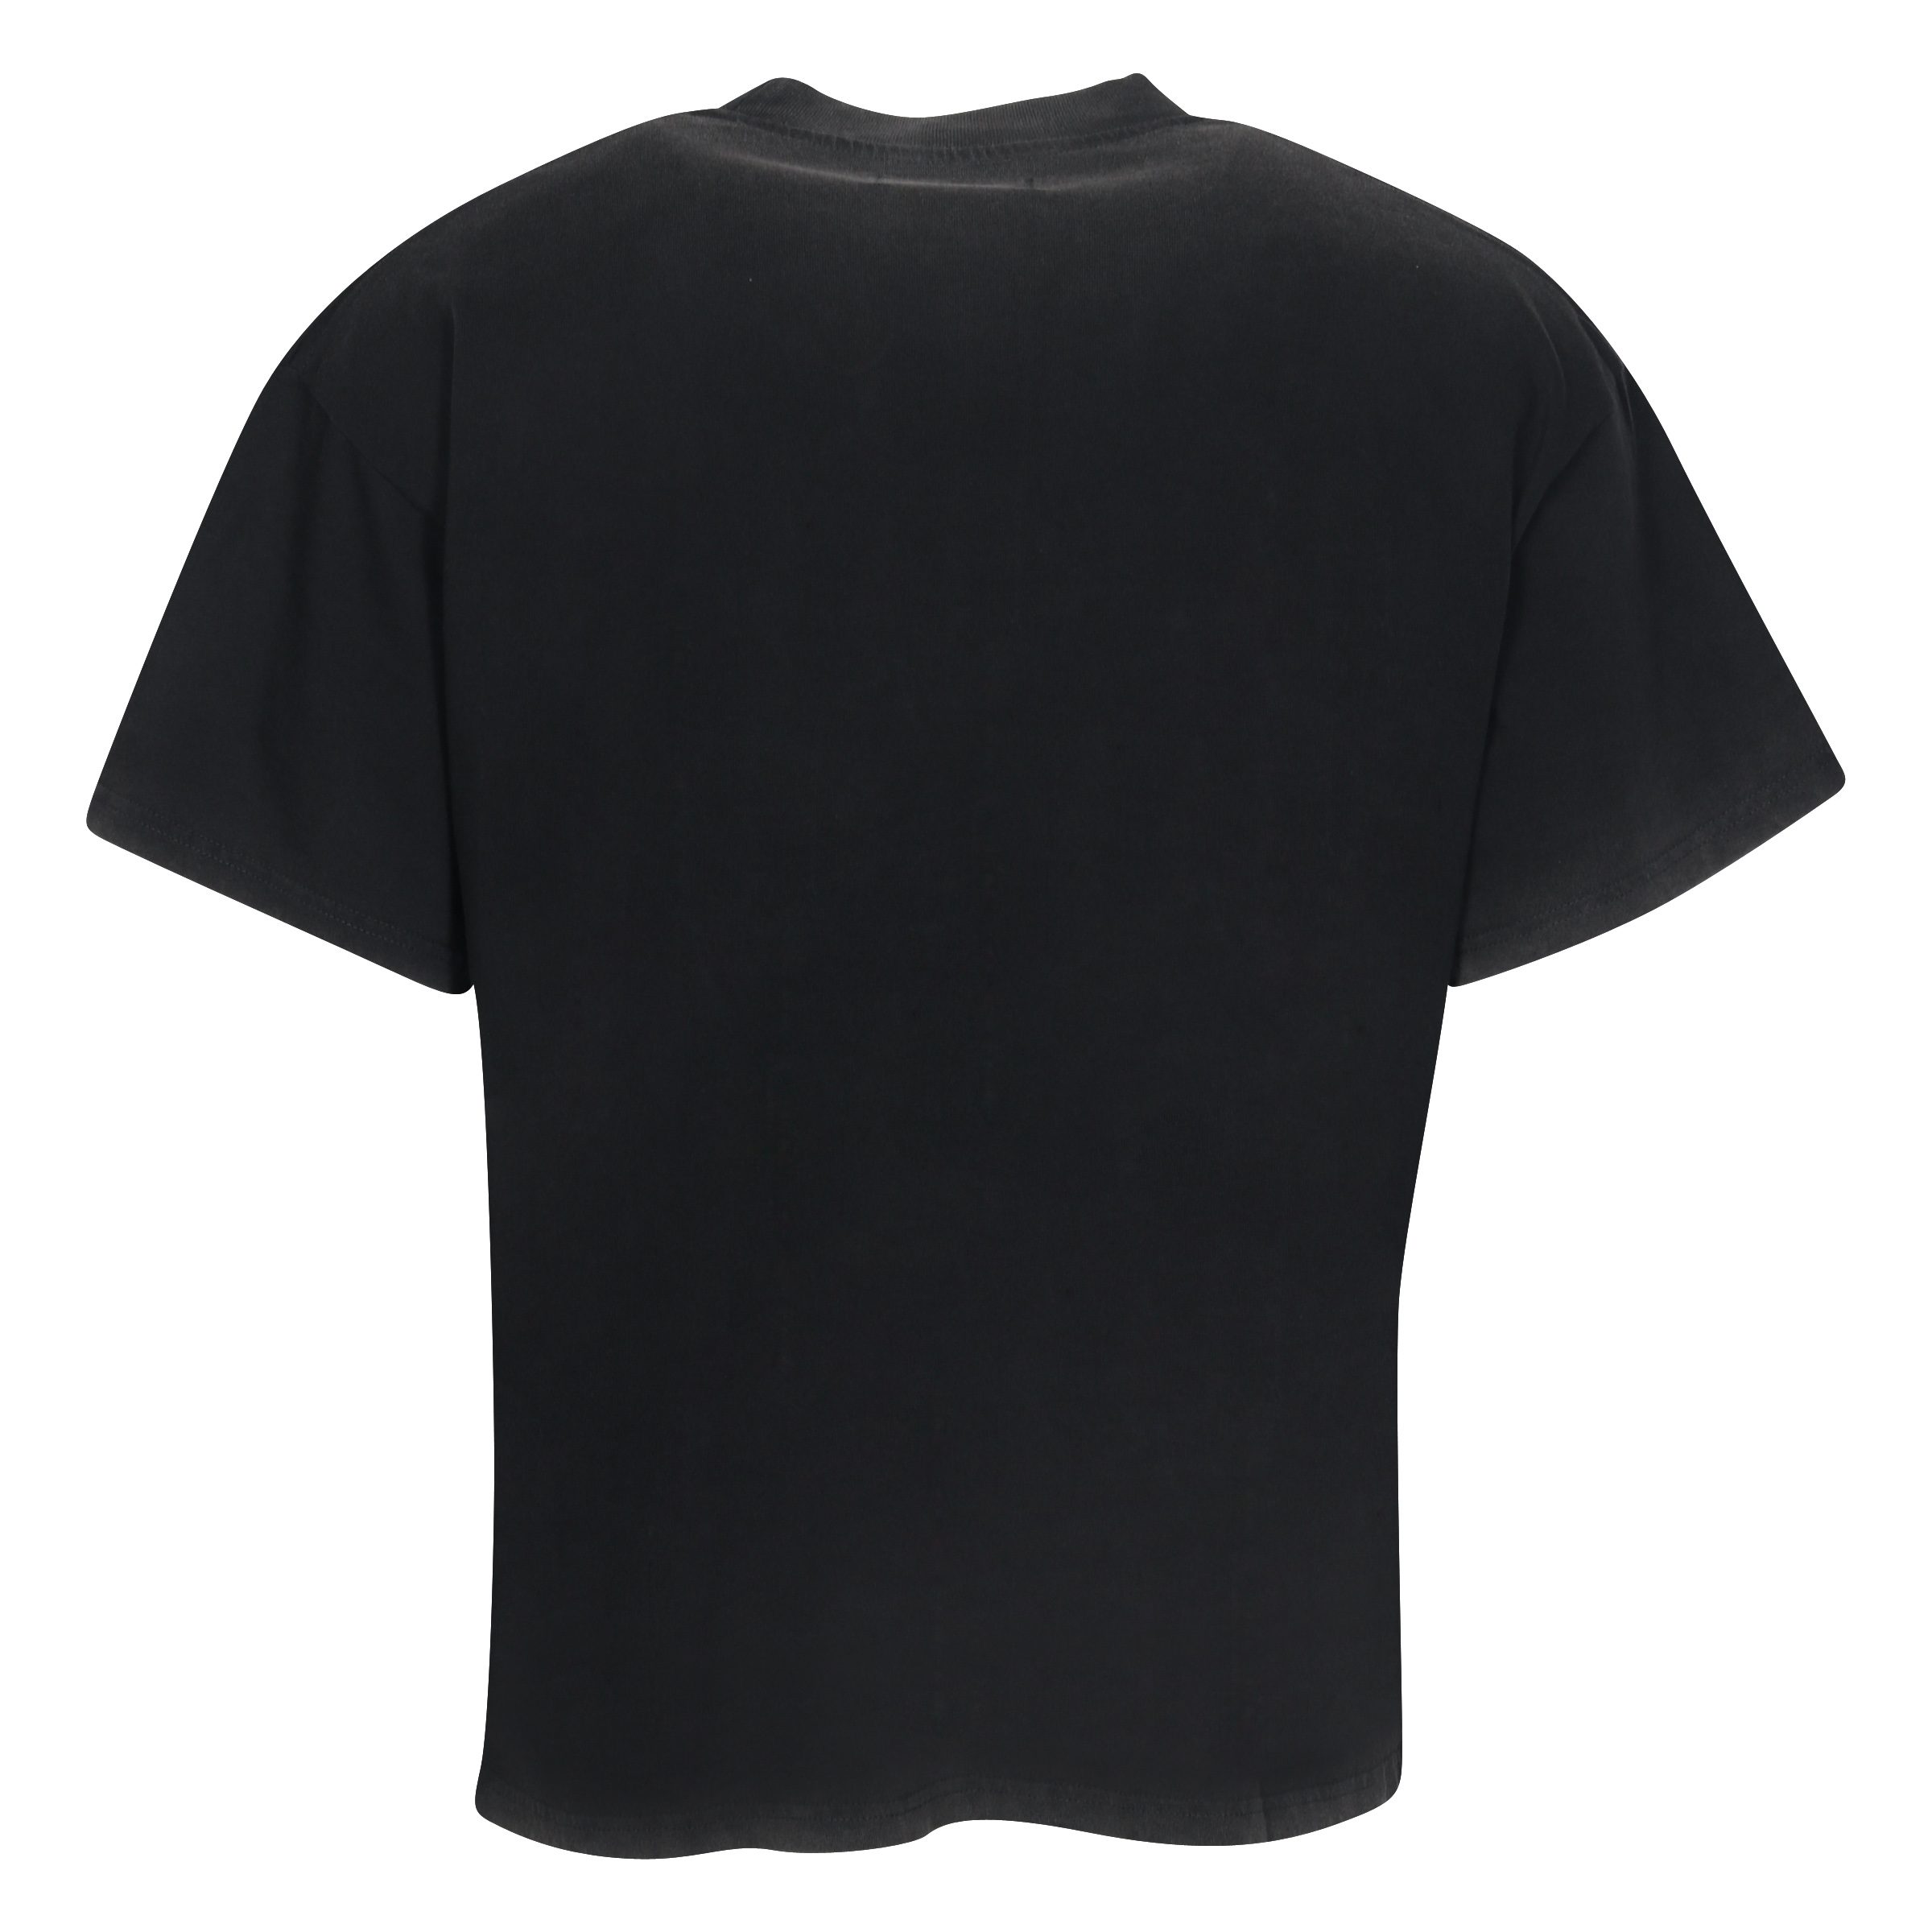 Represent Thoroughbred T-Shirt in Vintage Black XL